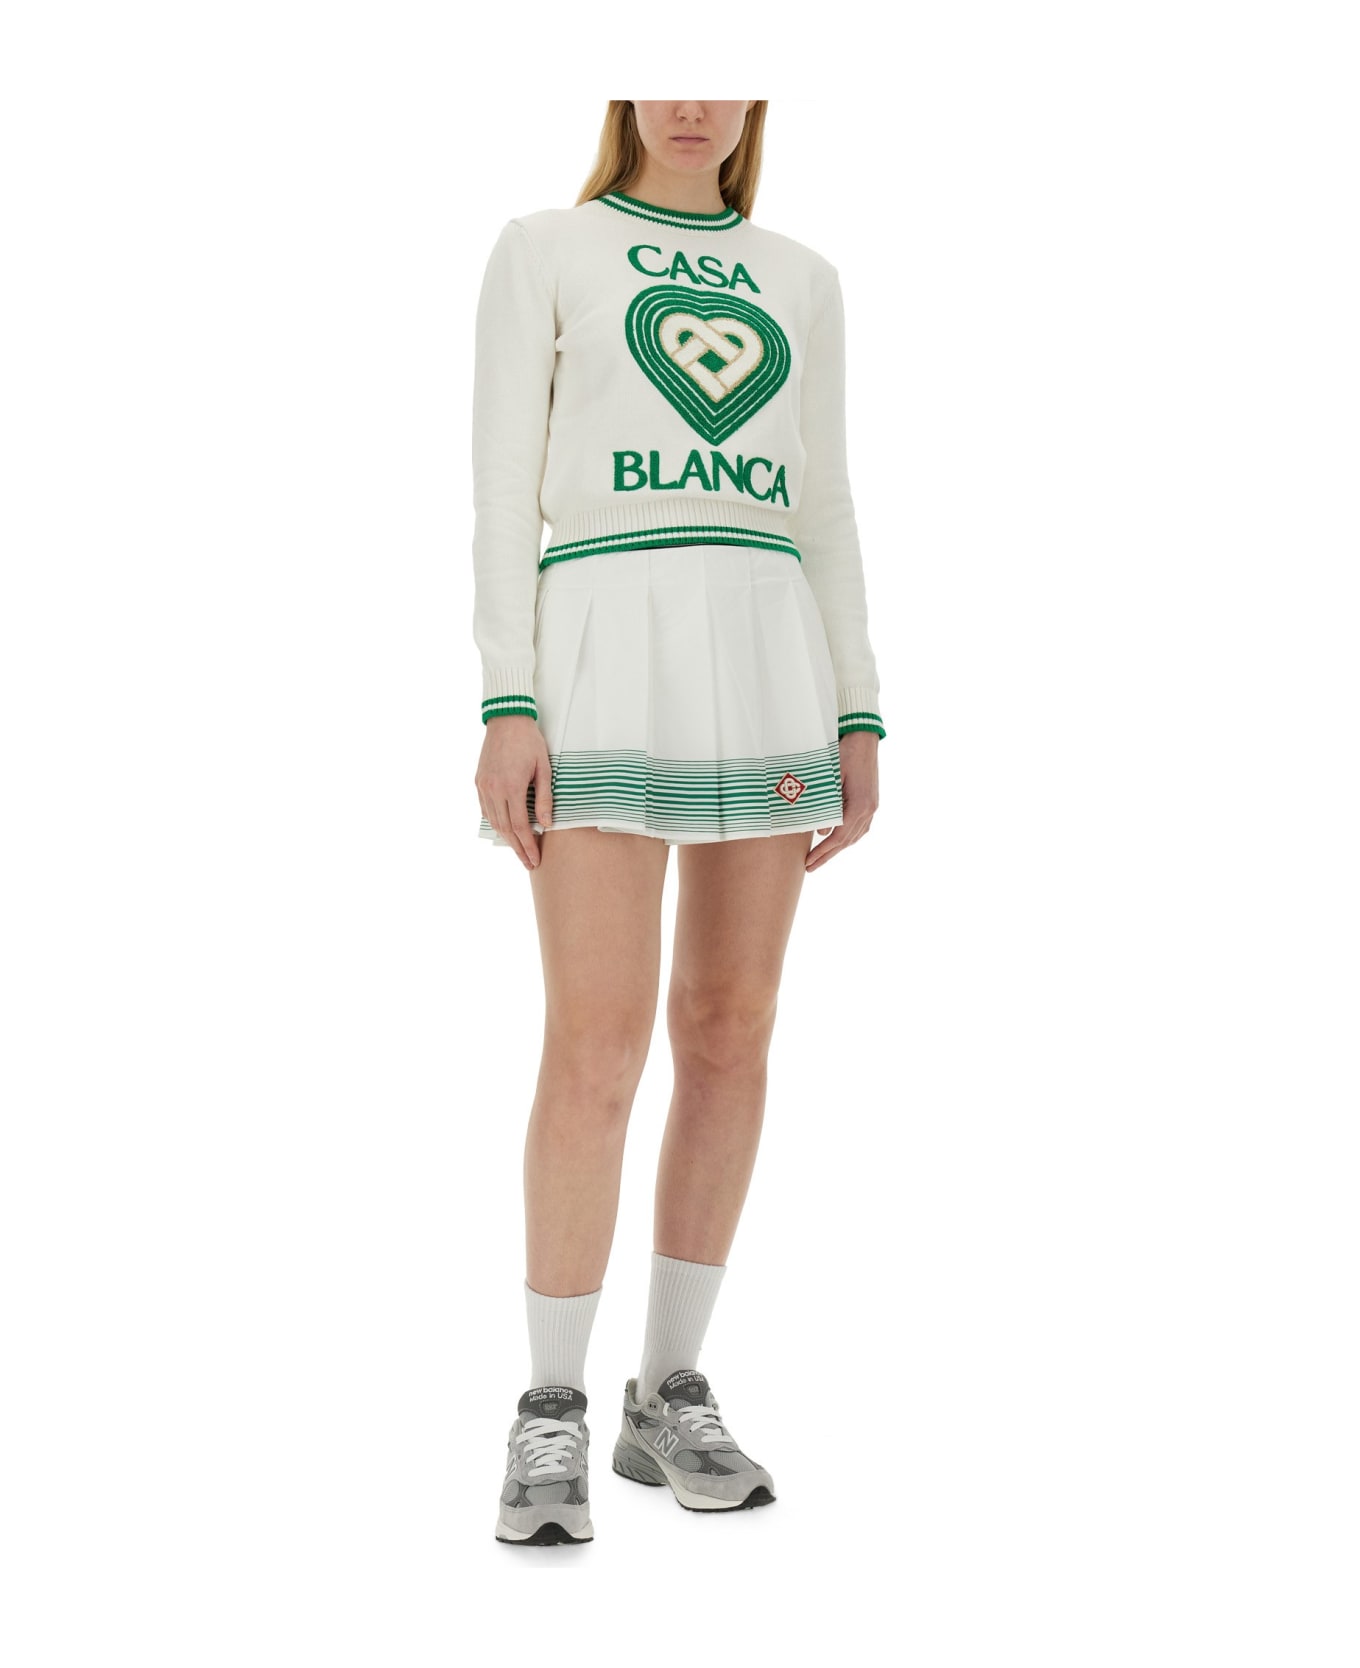 Casablanca Mini Skirt - Bianco e Verde